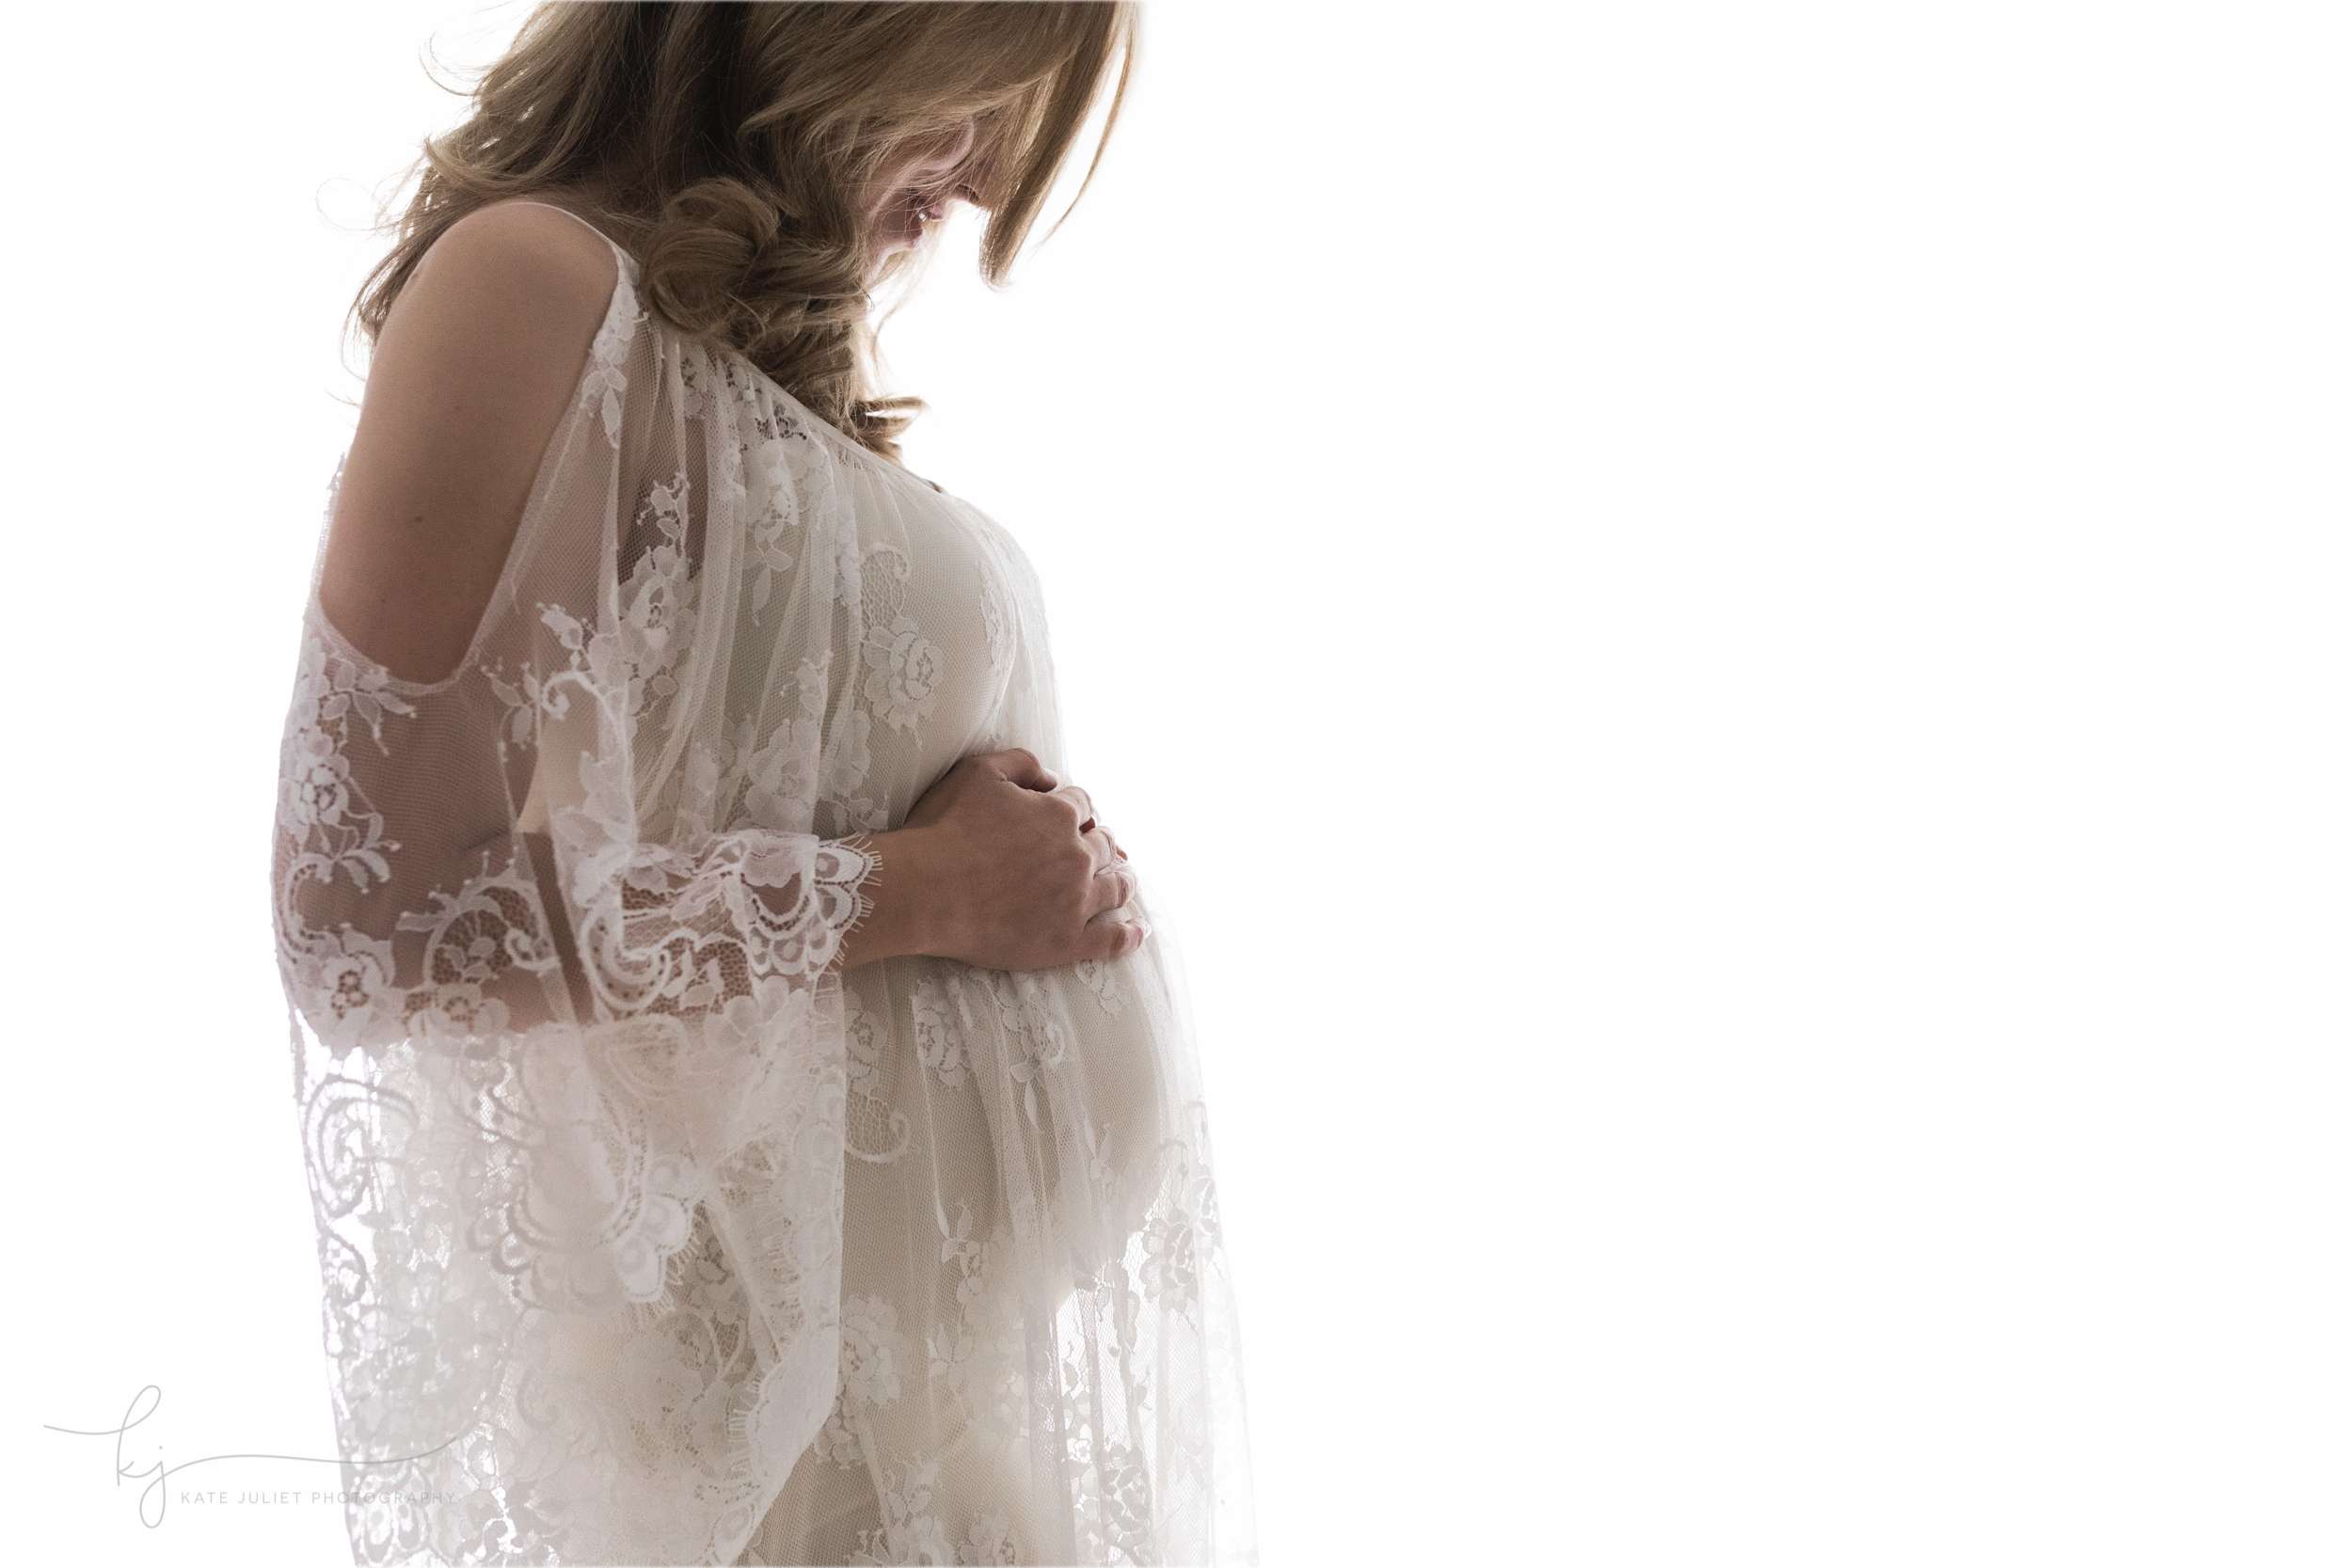 Alexandria VA Pregnancy and Newborn Photographer | Kate Juliet Photography